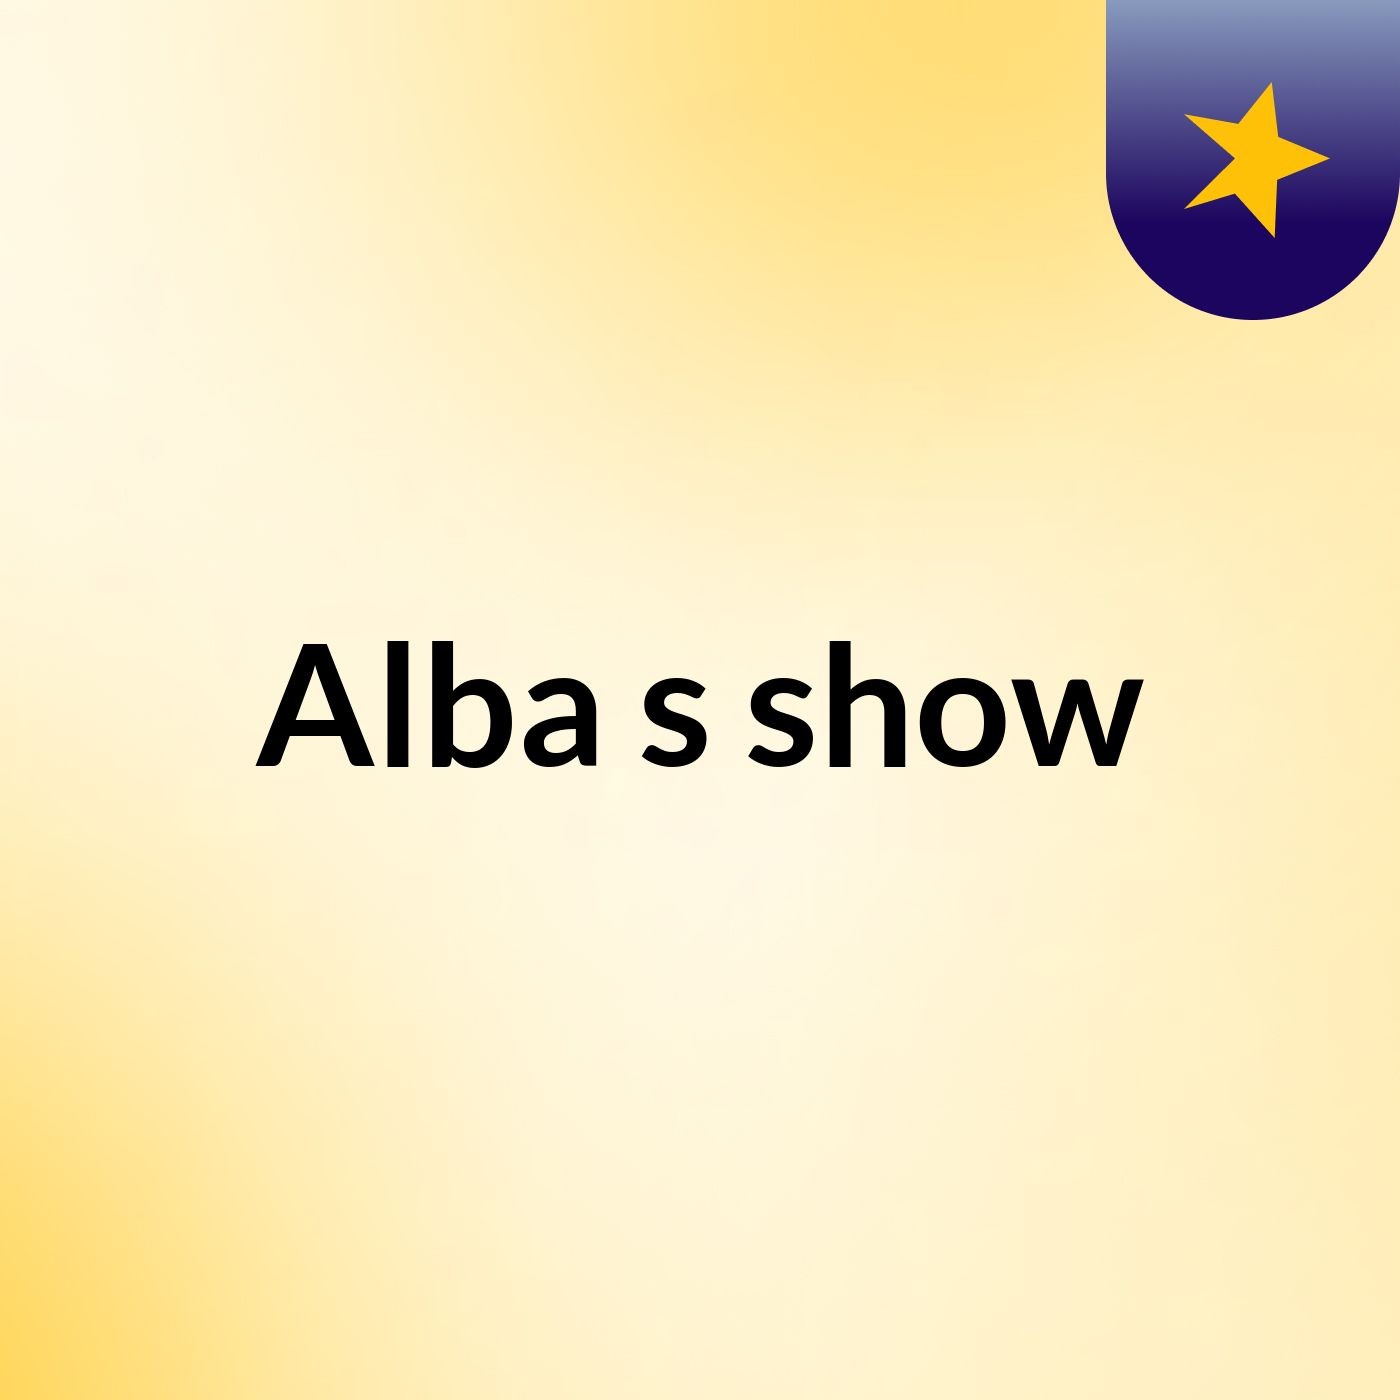 Alba's show